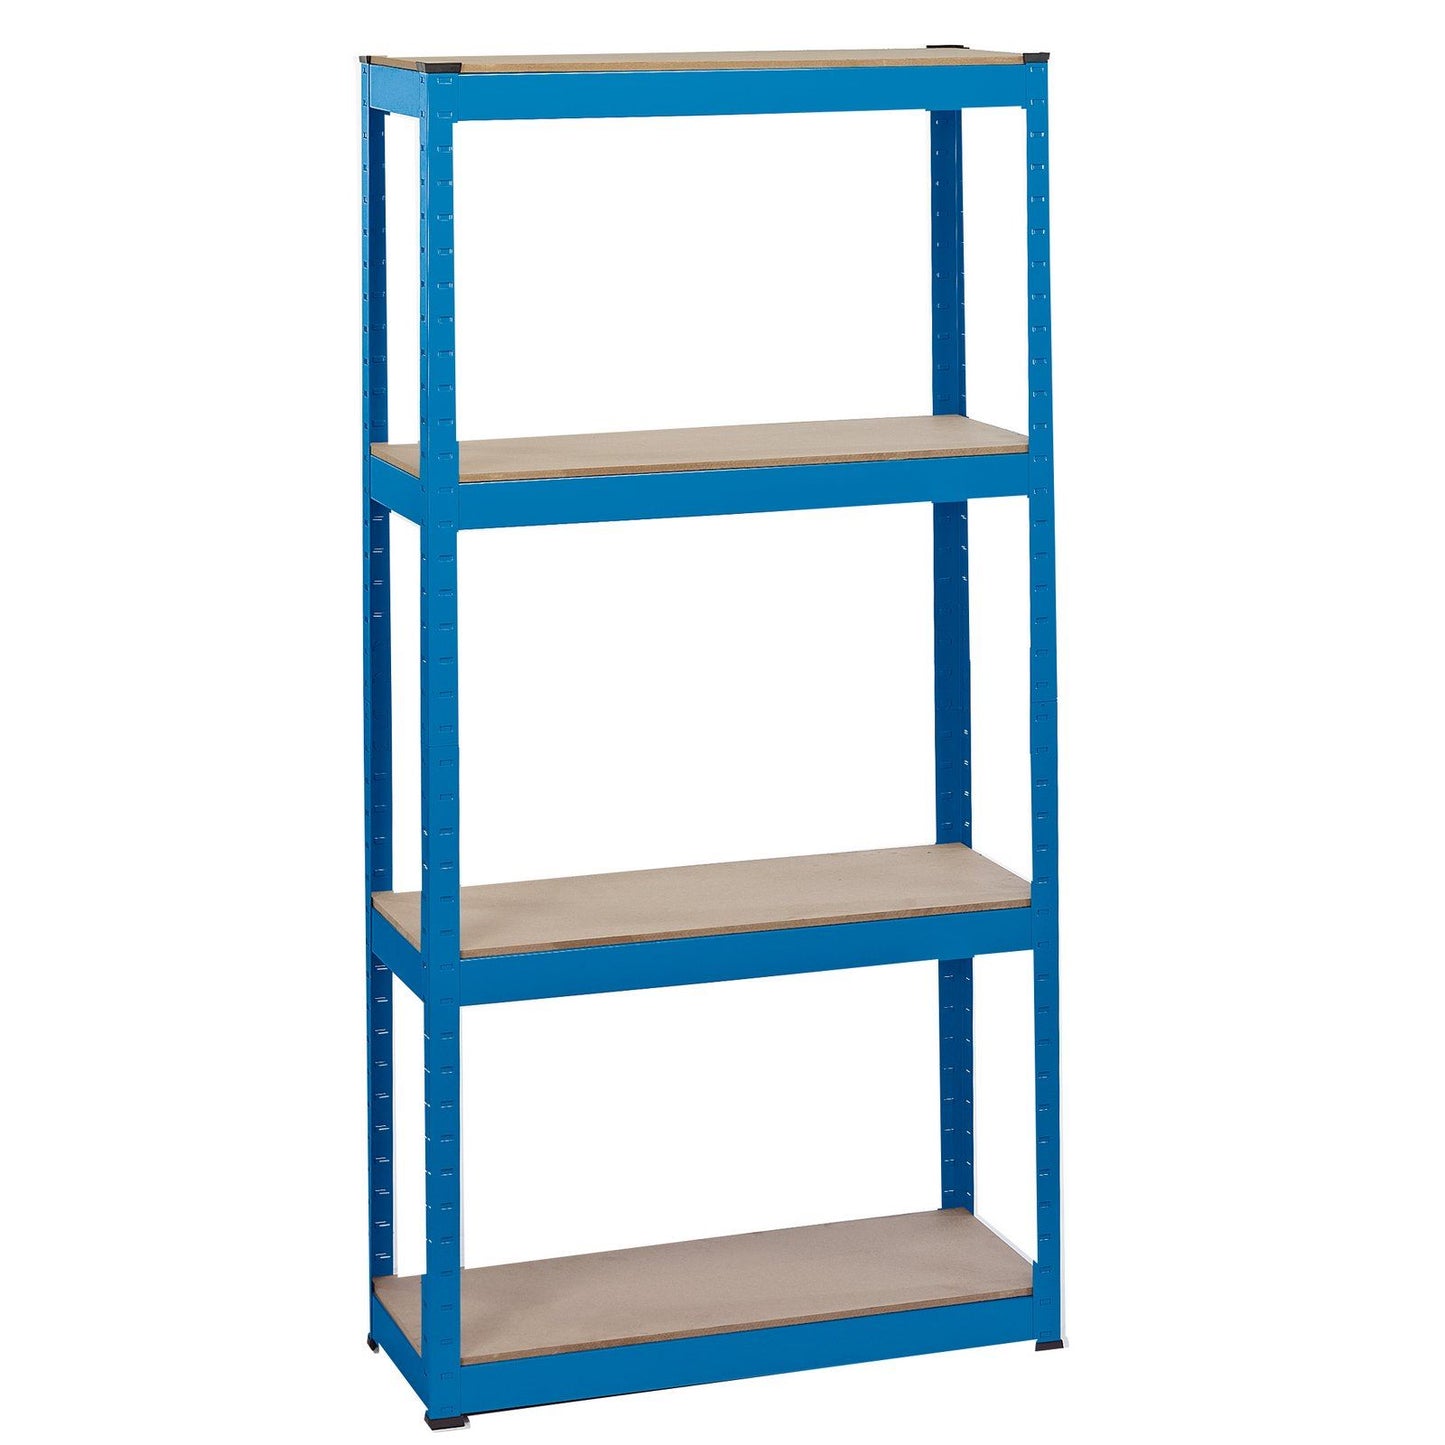 Draper Steel Shelving Unit - Four Shelves (L760 x W300 x H1520mm) - 21658